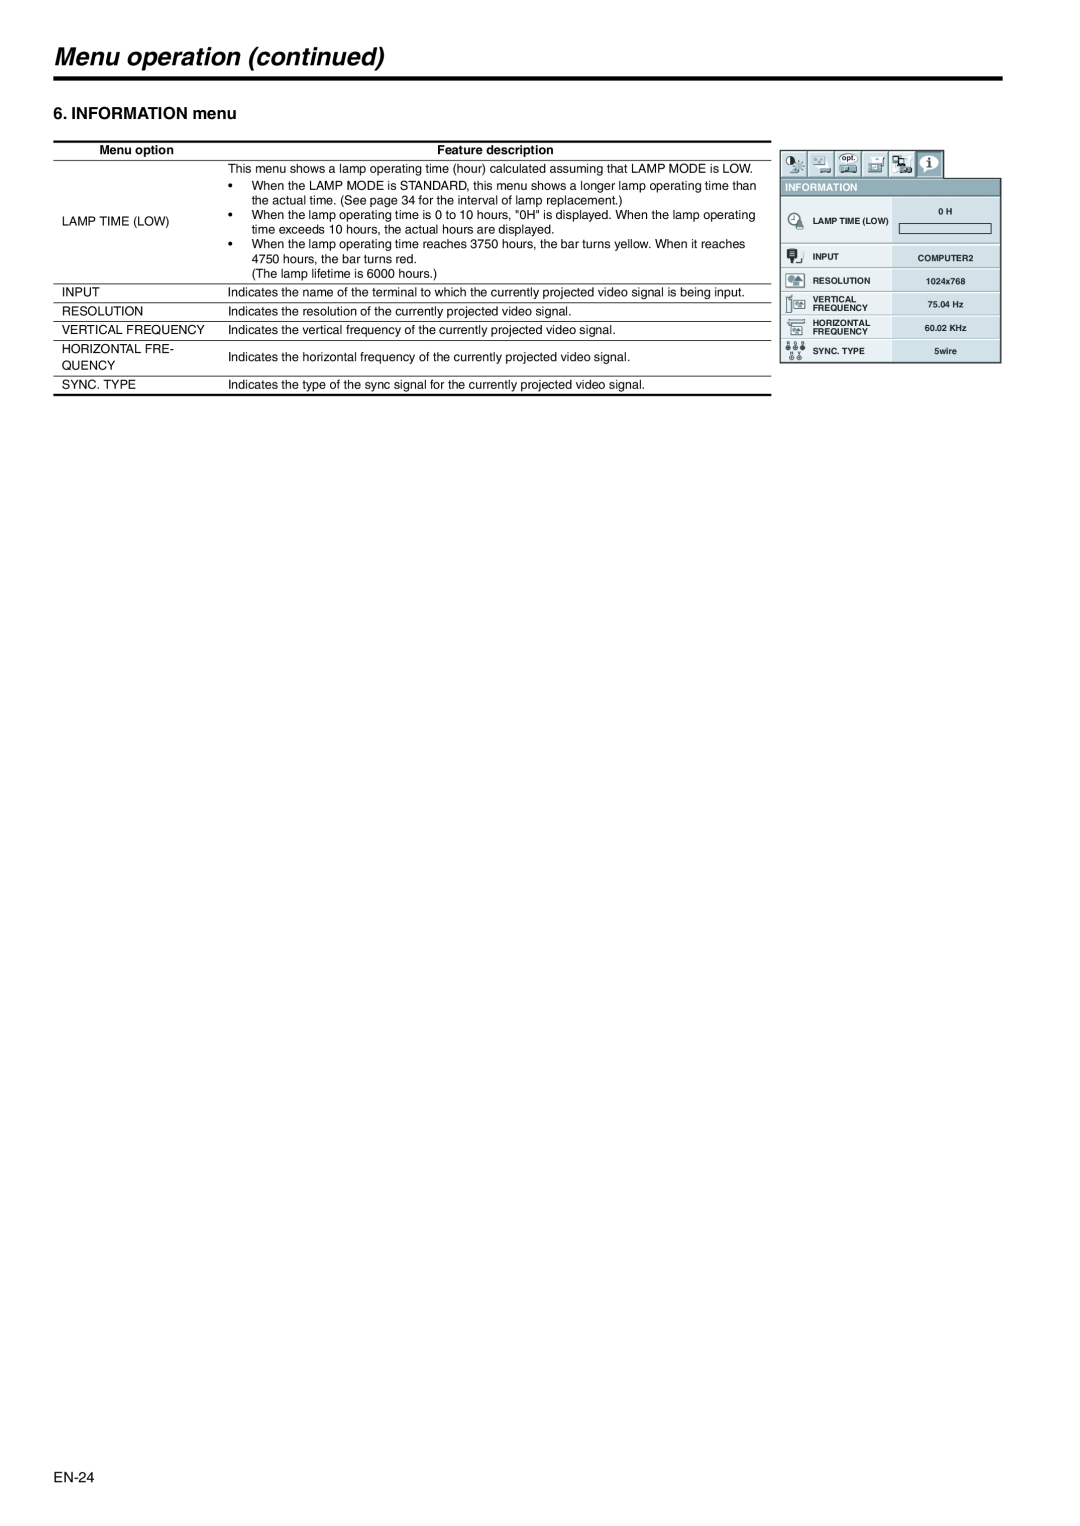 Mitsubishi Electronics XD280U-G INFORMATION menu, Menu operation continued, EN-24, Menu option, Feature description 